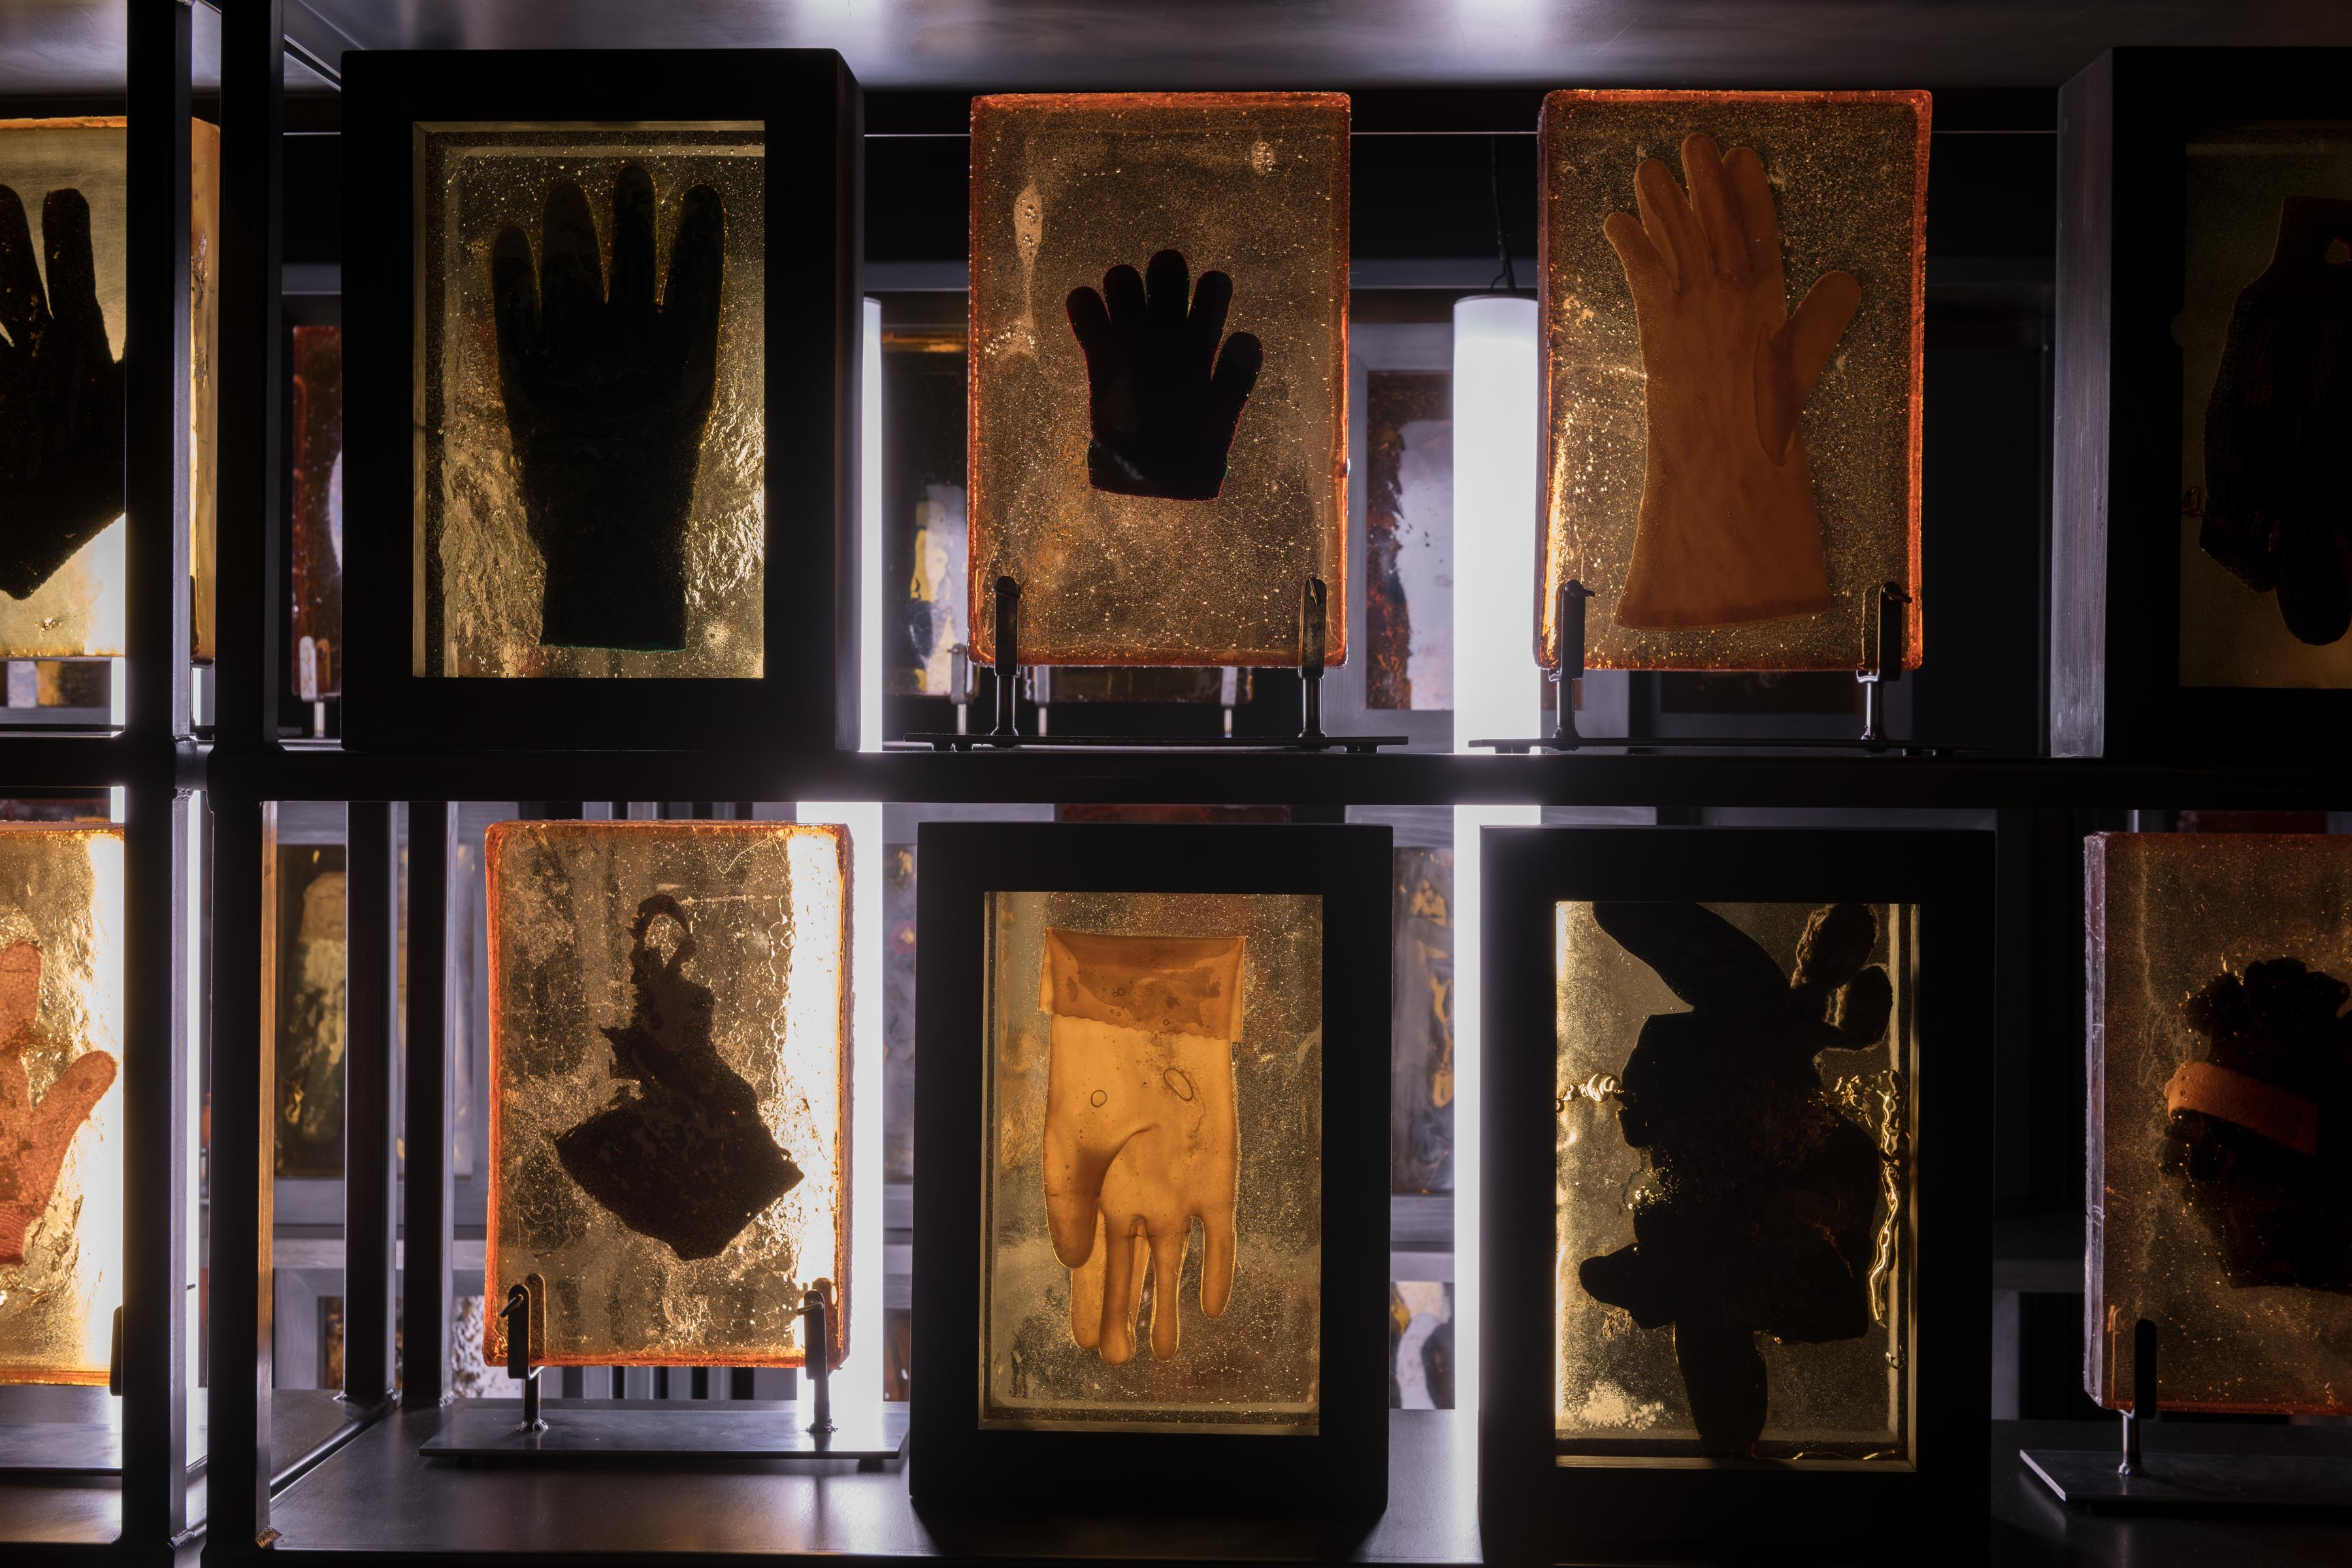 gloves cast in resinous medium displayed on shelves